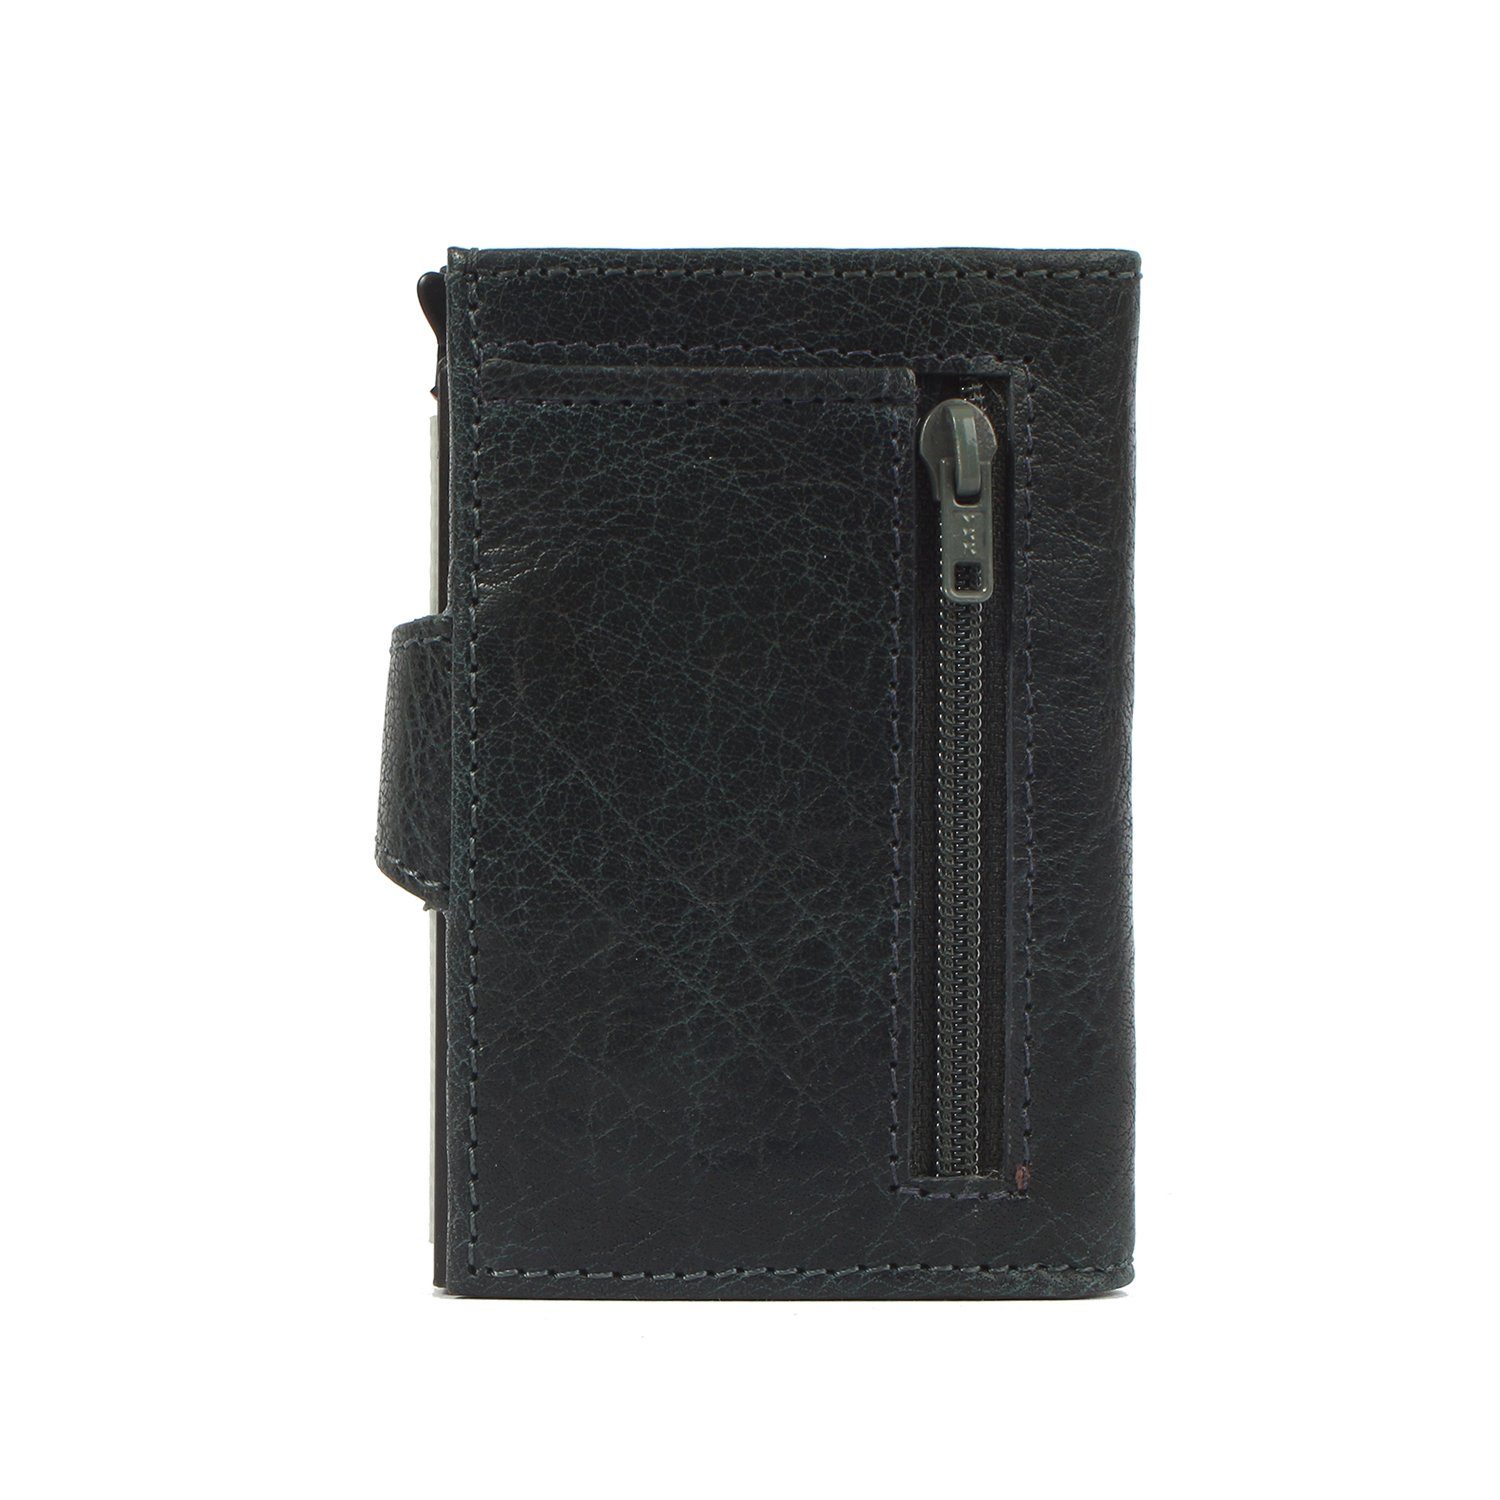 Margelisch Mini Geldbörse noonyu single Leder Kreditkartenbörse leather, steelblue Upcycling aus